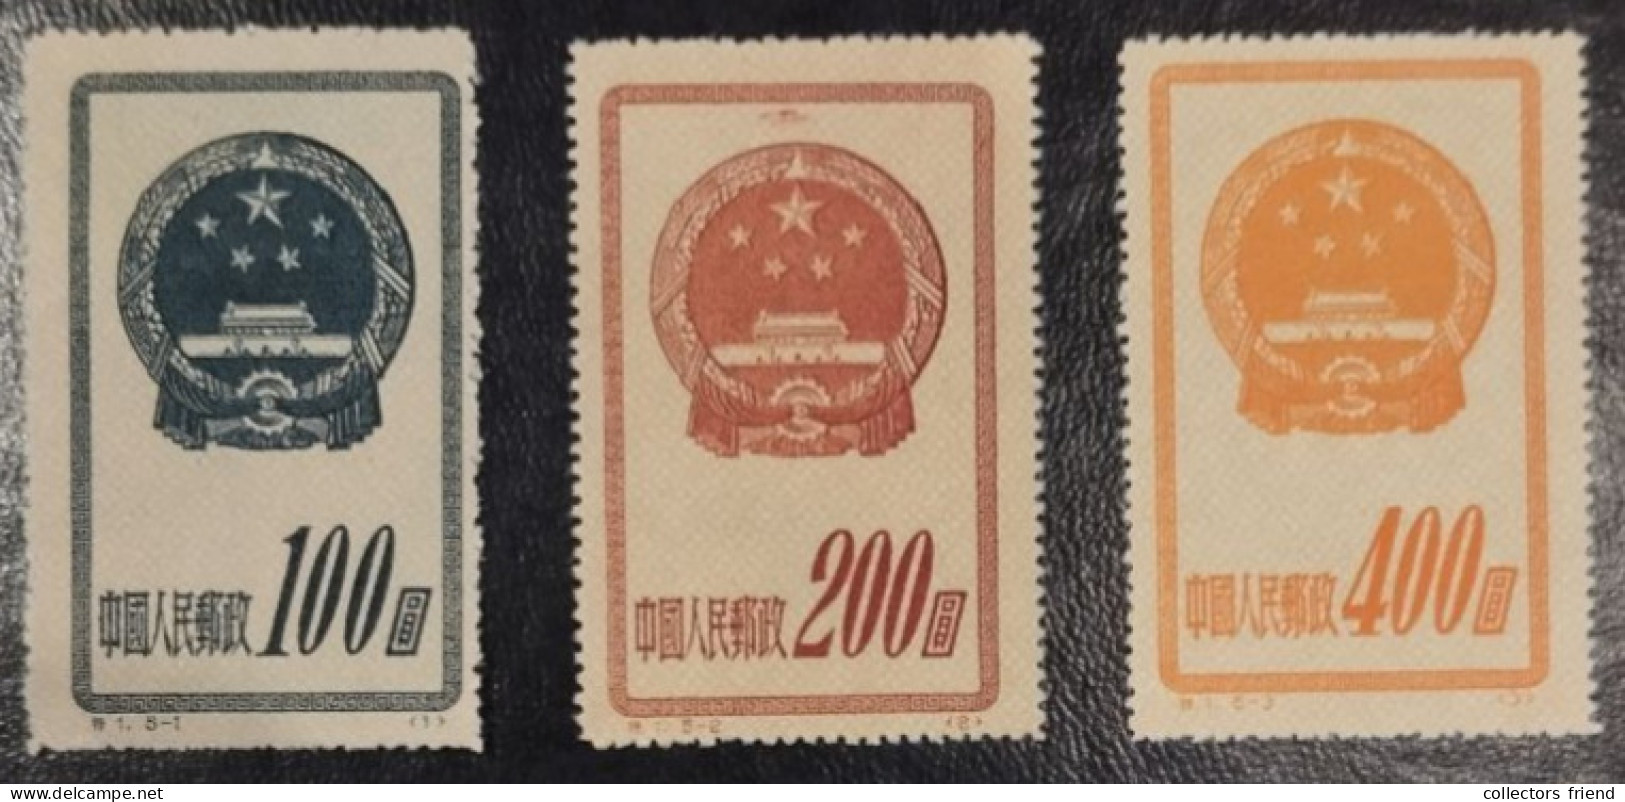 China- 1950 - Y.T. 907 + 908 + 909  - Thin Paper (?) - MNH - Nuevos